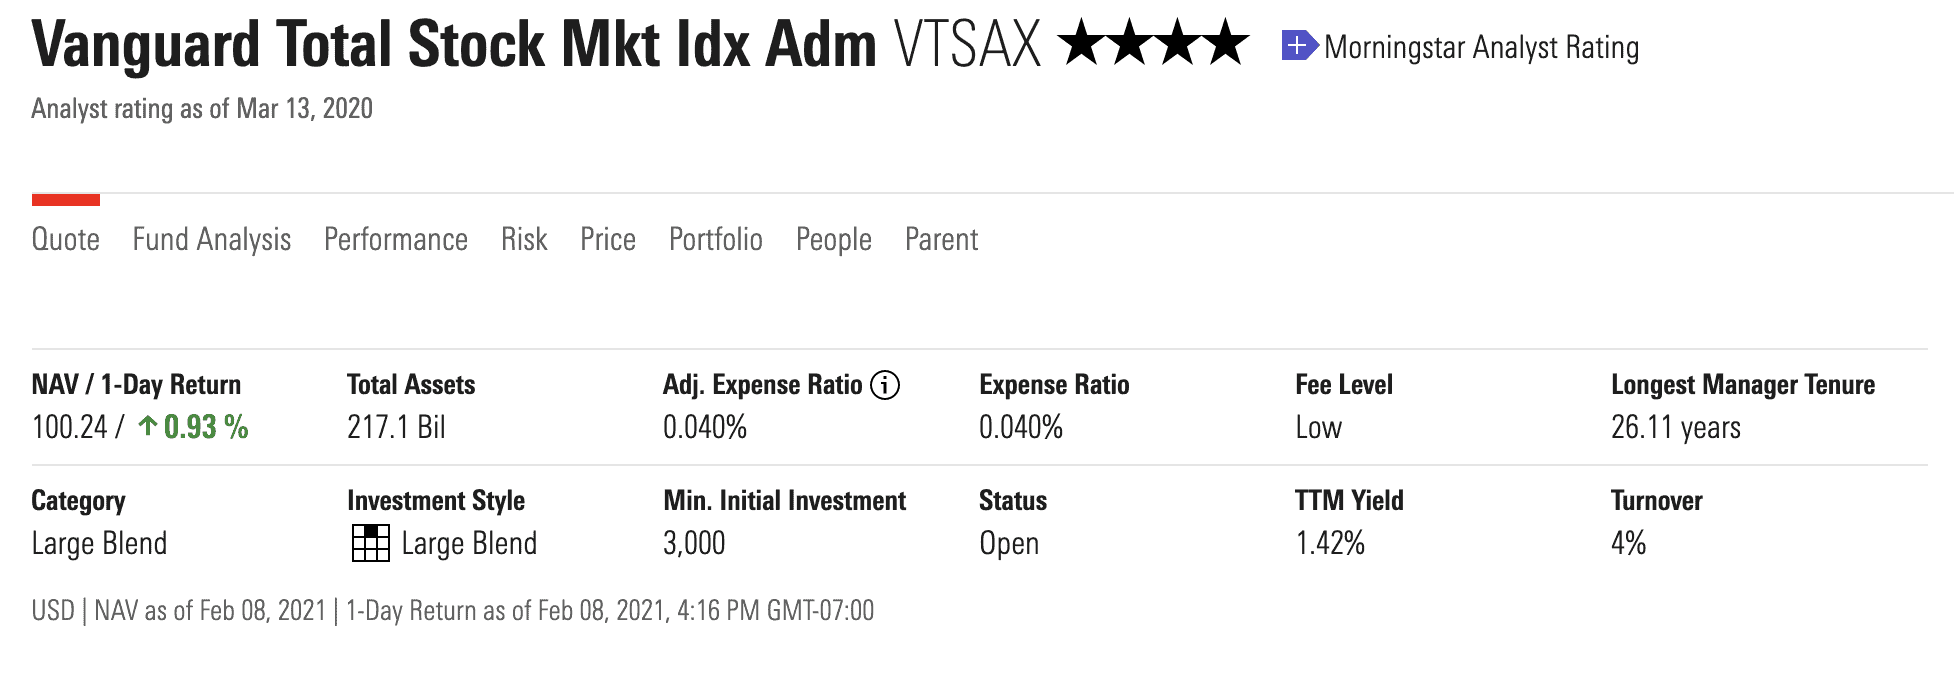 Finding VTSAX expense ratio